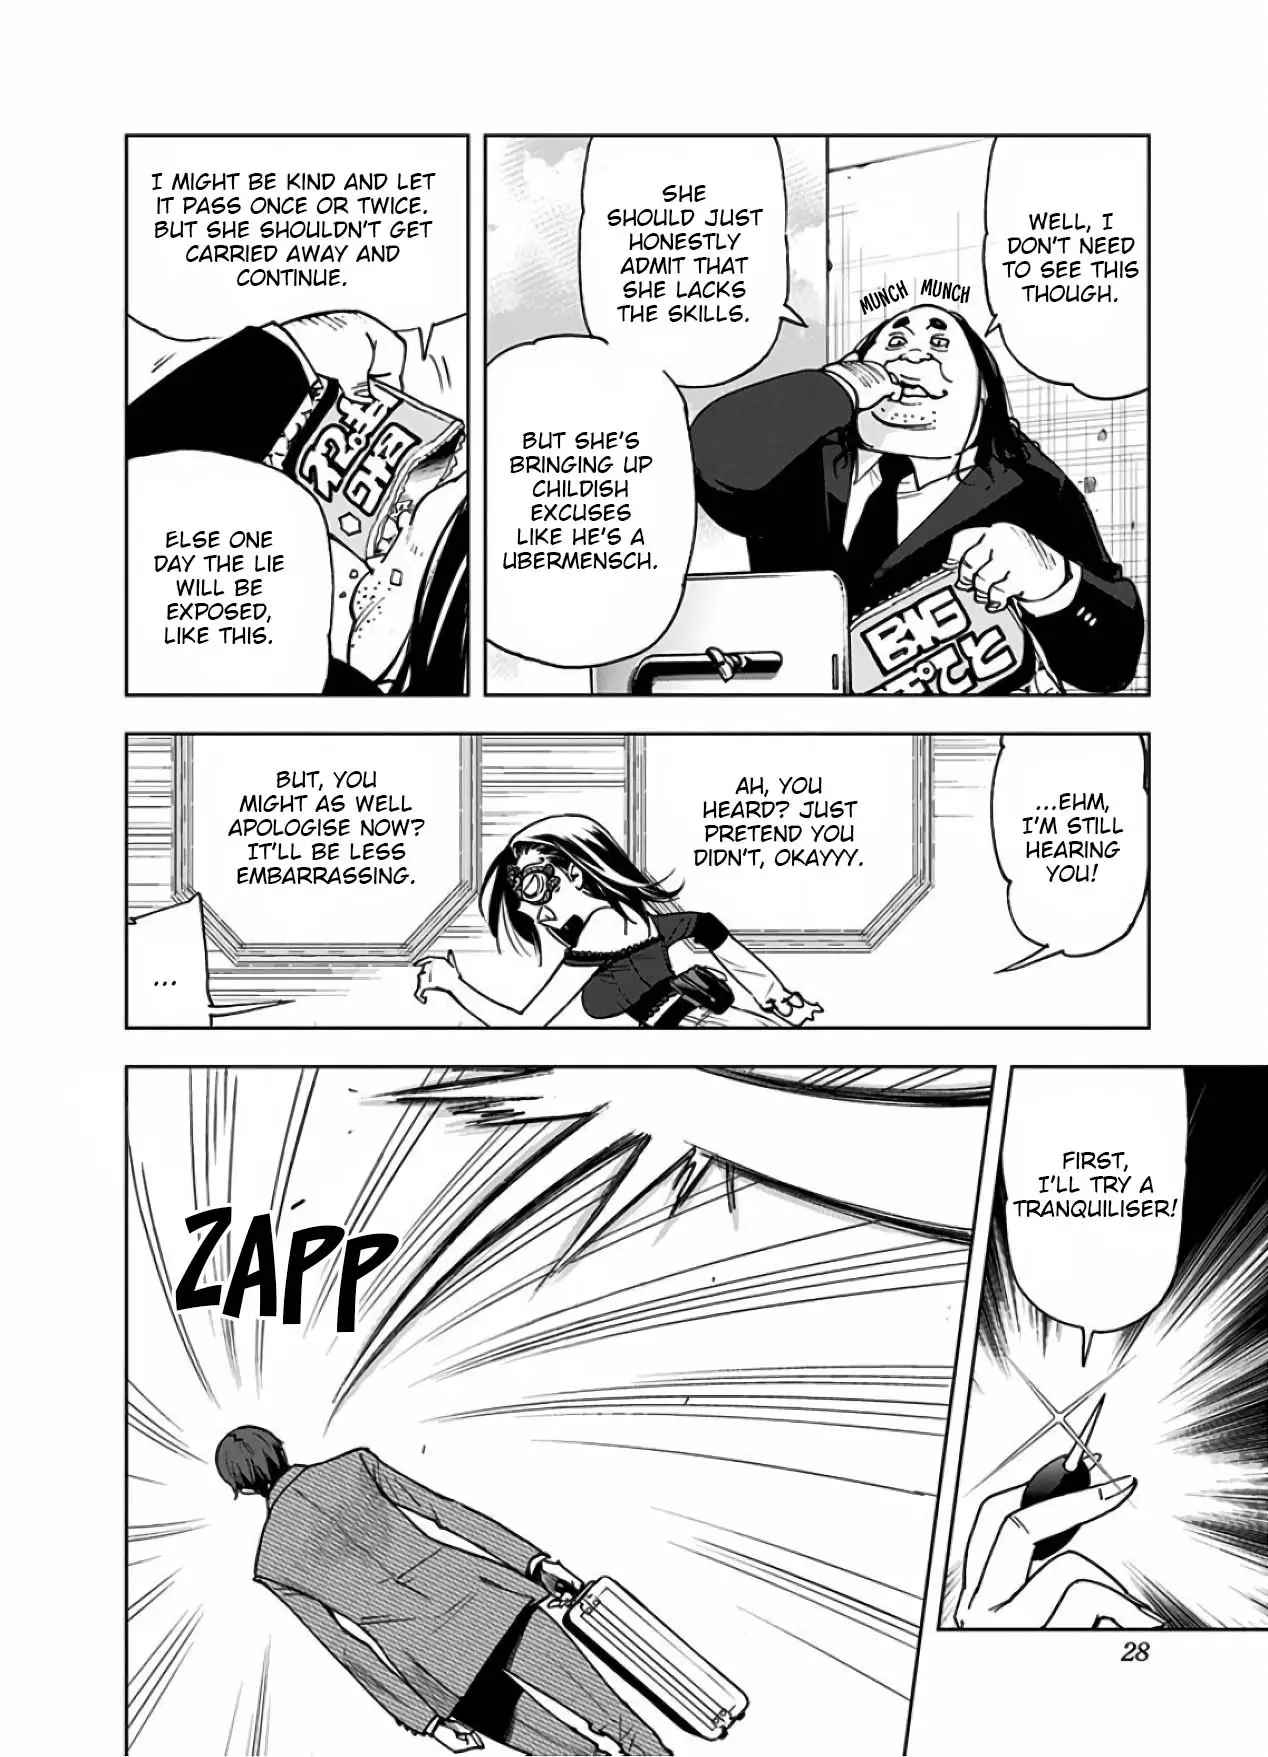 Kiruru Kill Me - 11 page 6